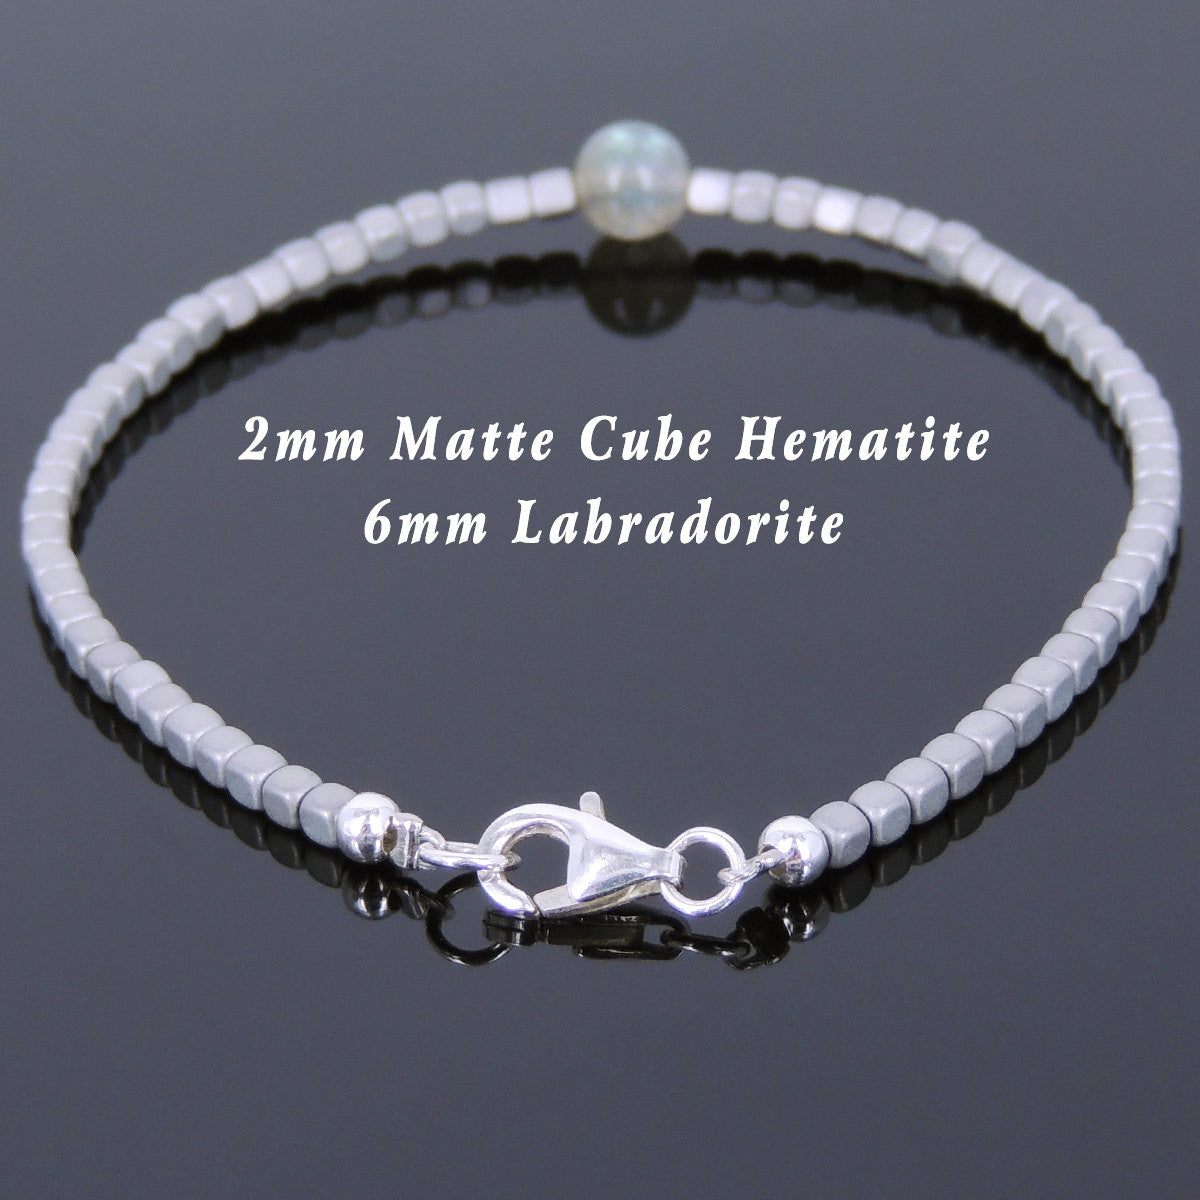 Labradorite & Cubed Matte Hematite Healing Gemstone Bracelet with S925 Sterling Silver Spacer Beads & Clasp - Handmade by Gem & Silver BR720